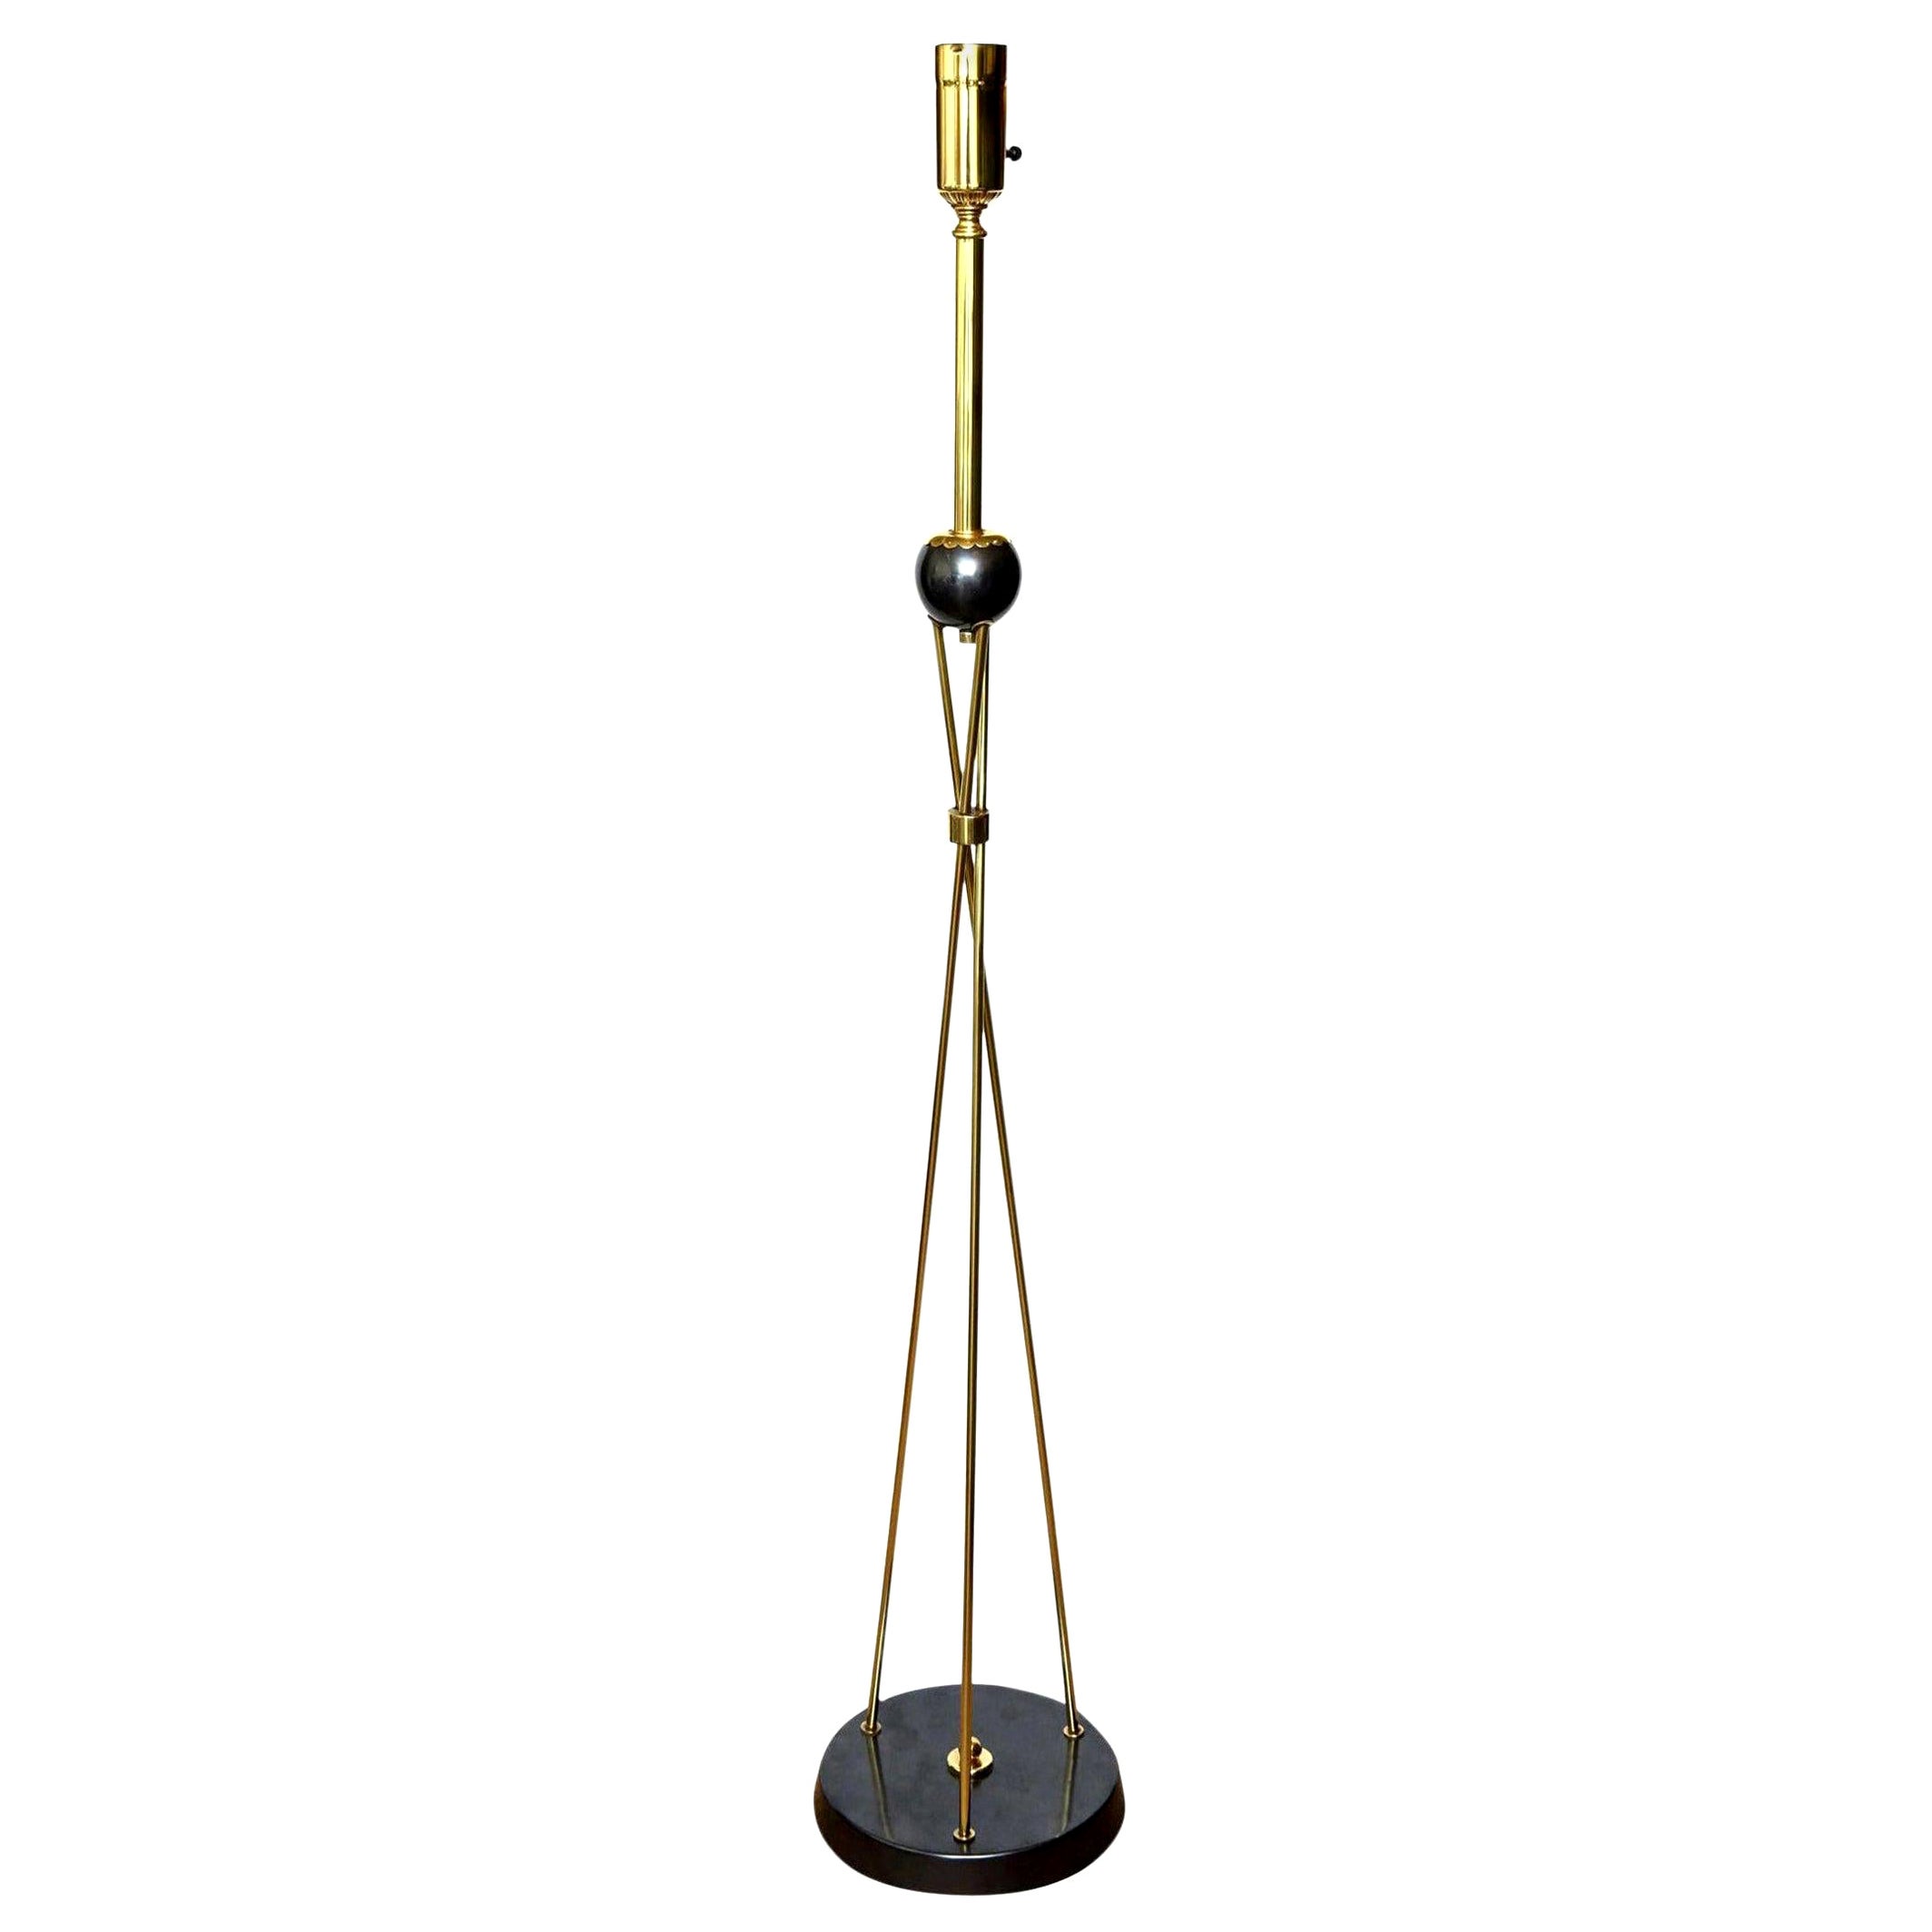 Brass and Gun Metal Restored Floor Lamp Style of Parzinger Mid-Century Modern